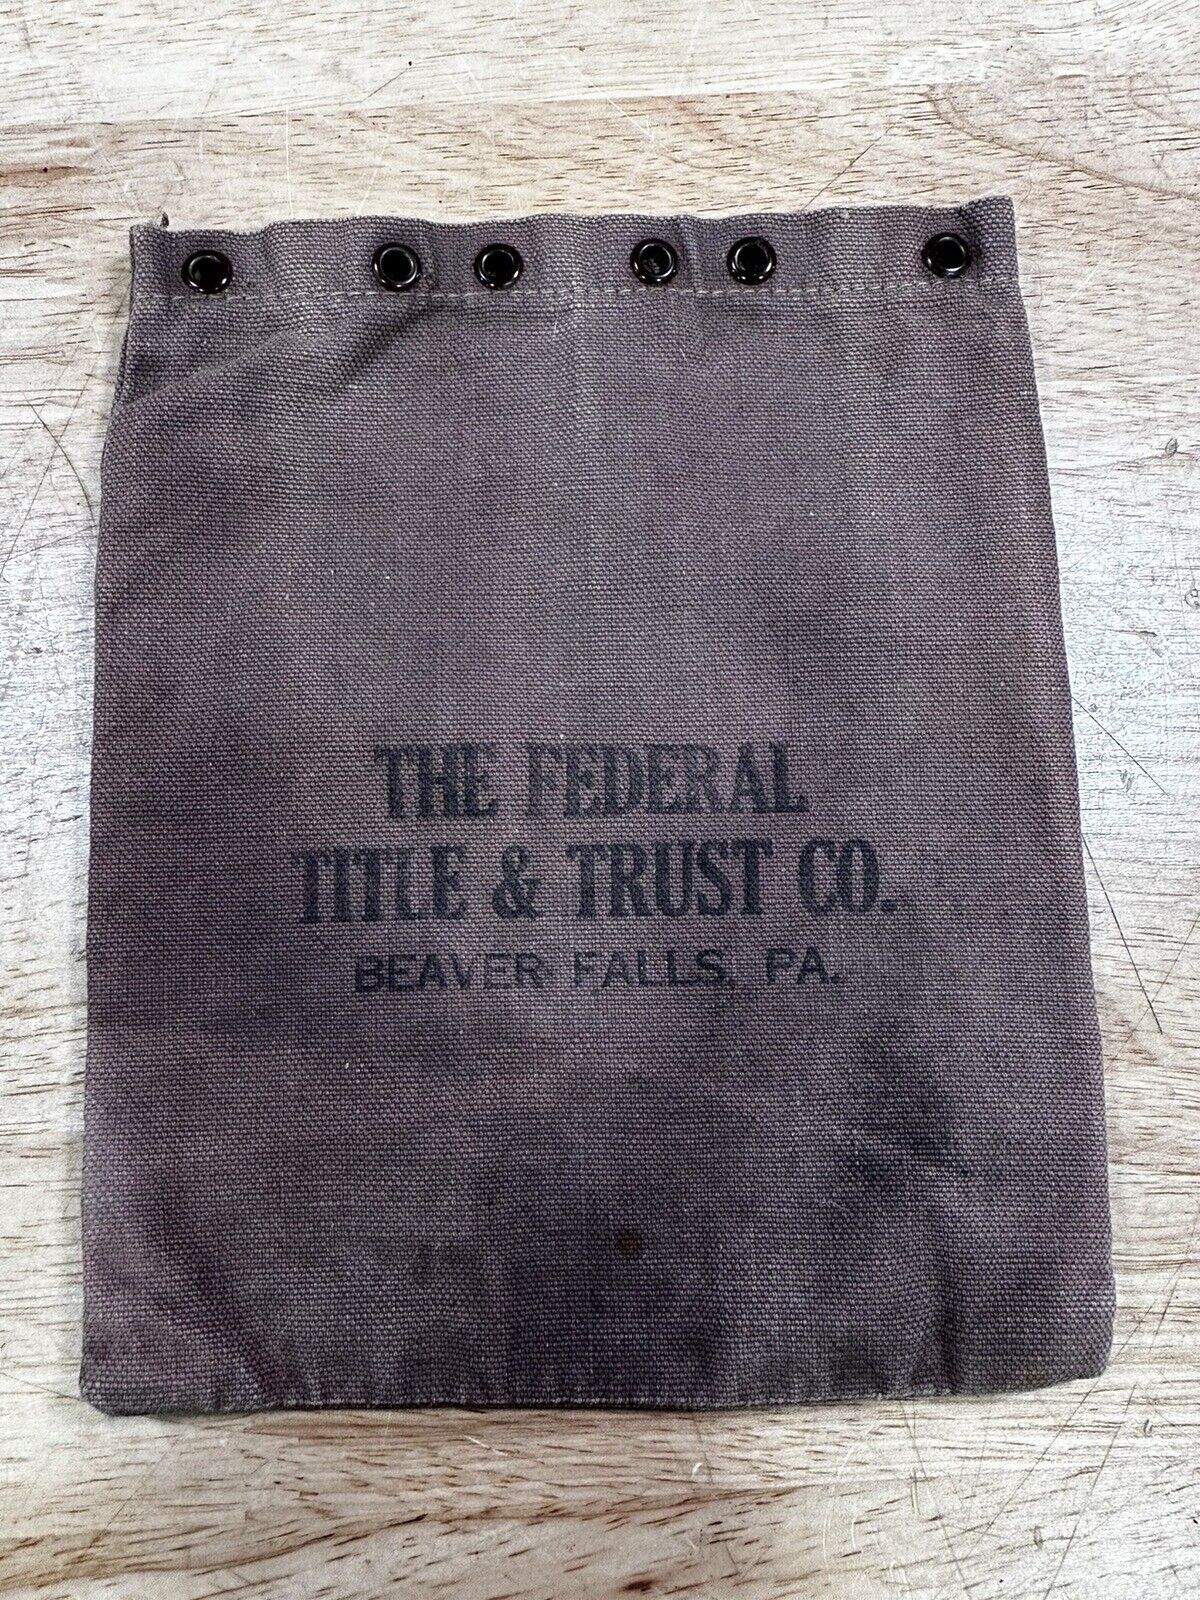 Vintage Federal Title & Trust Co. “Beaver Falls, PA” 